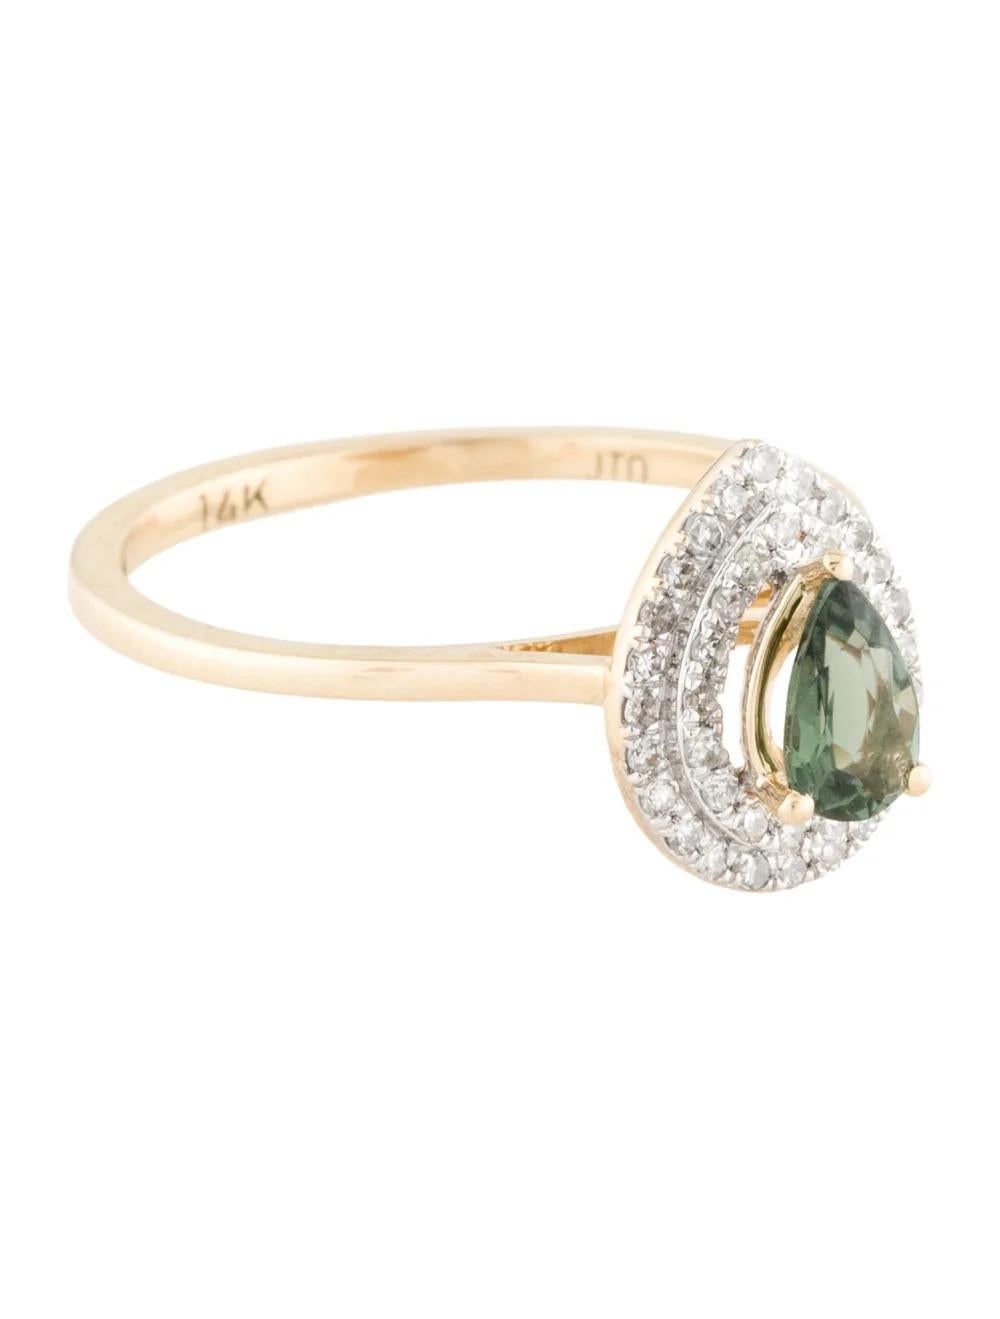 14K Tourmaline & Diamond Cocktail Ring, Size 6.5 - Stunning Design, Luxury Piece For Sale